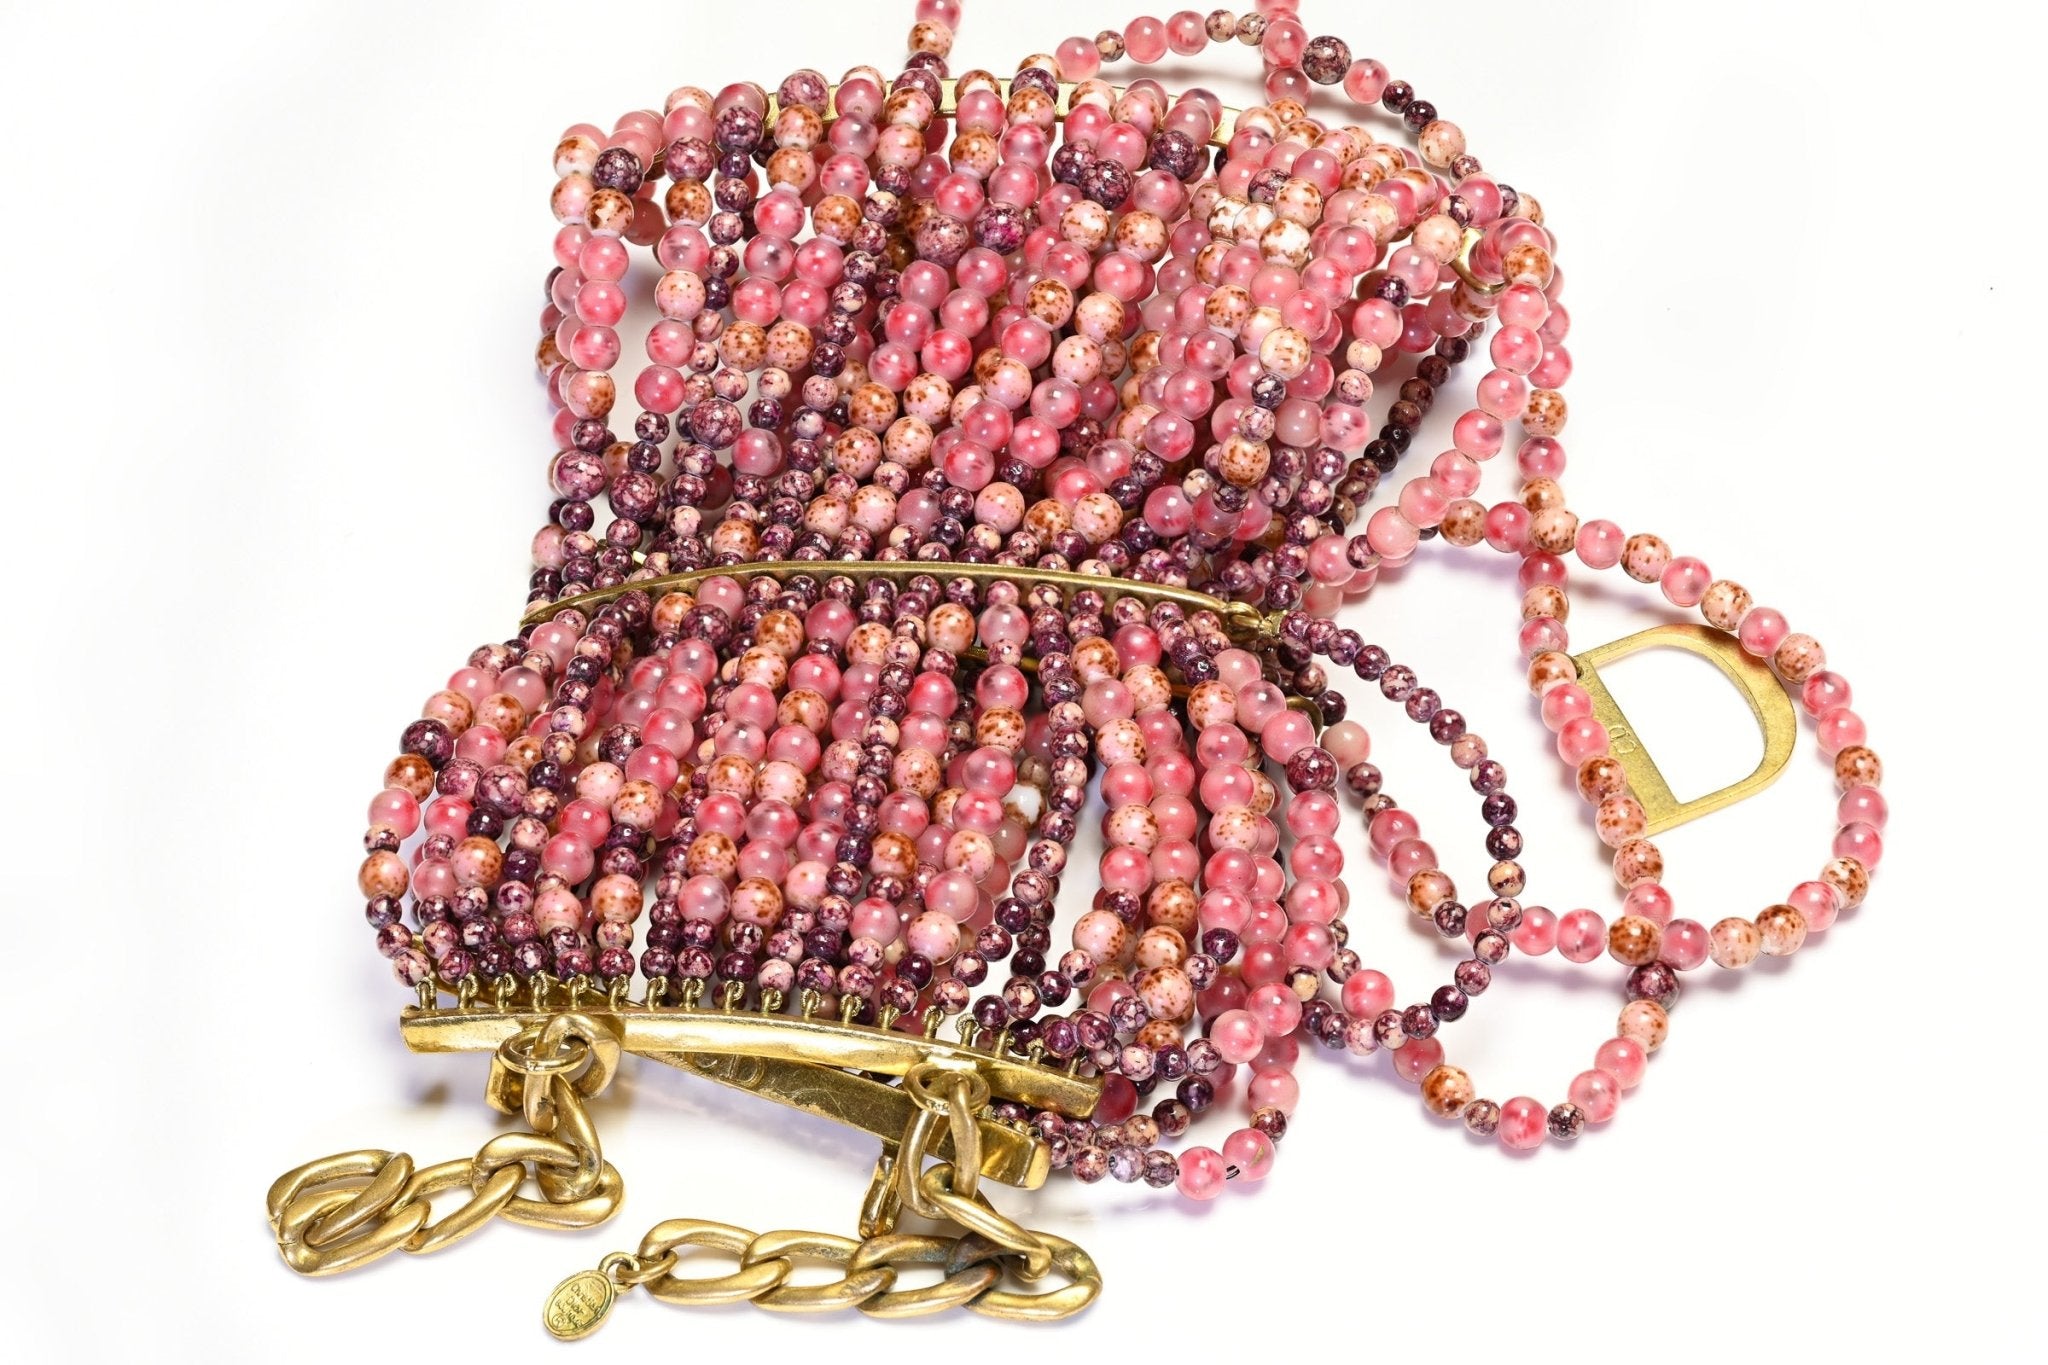 Christian Dior Couture 1998 Galliano Pink Glass Beads Masai Maasai Choker Necklace